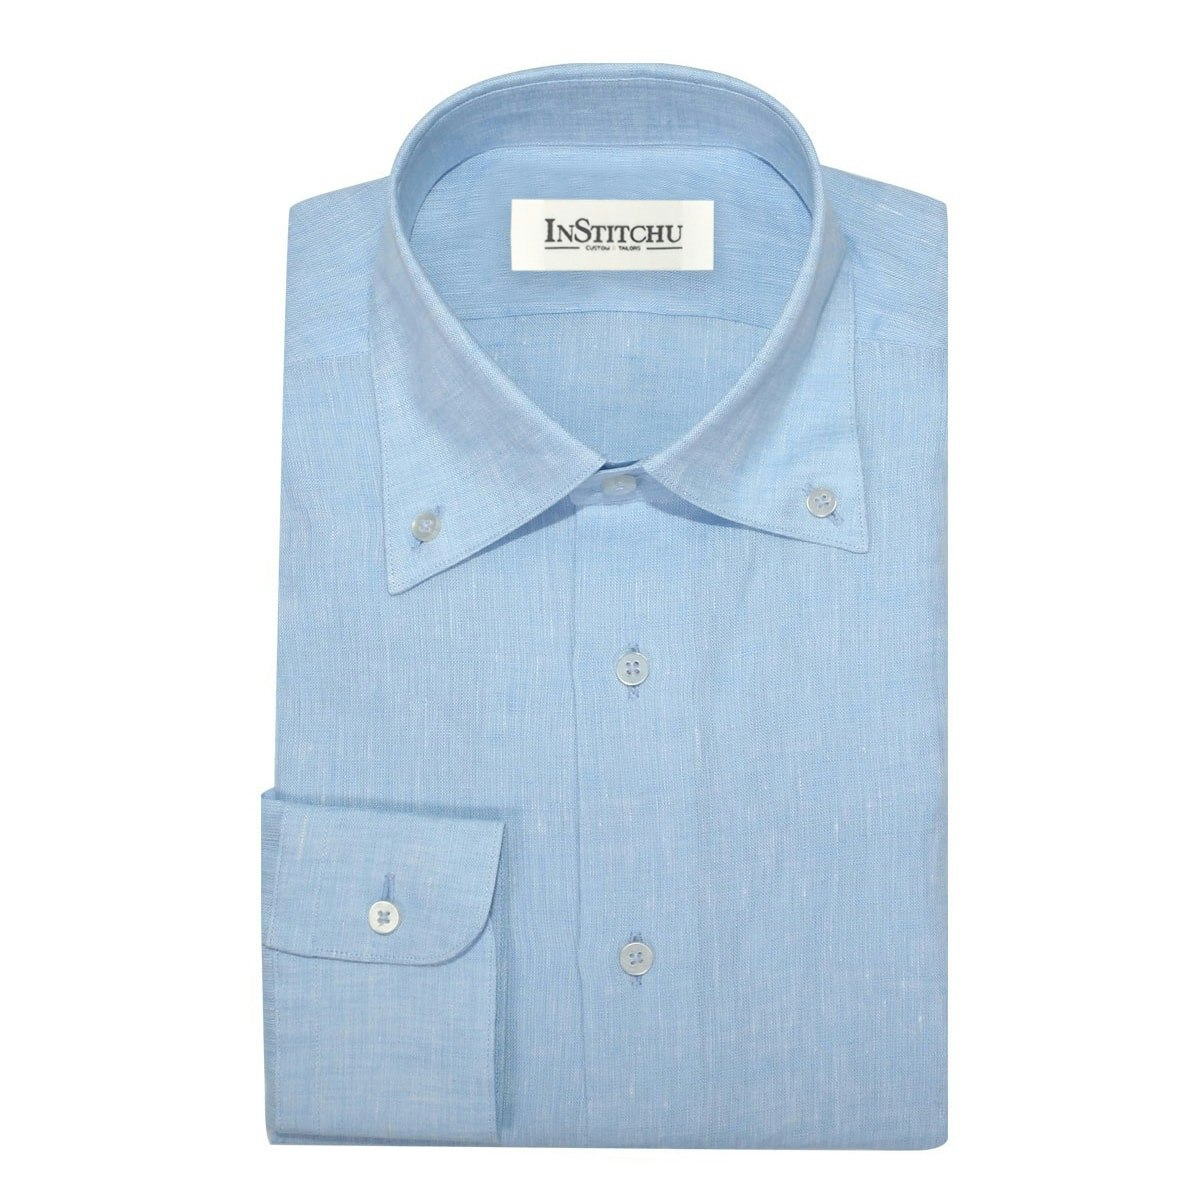 InStitchu Collection The Encinitas Light Blue Linen Shirt